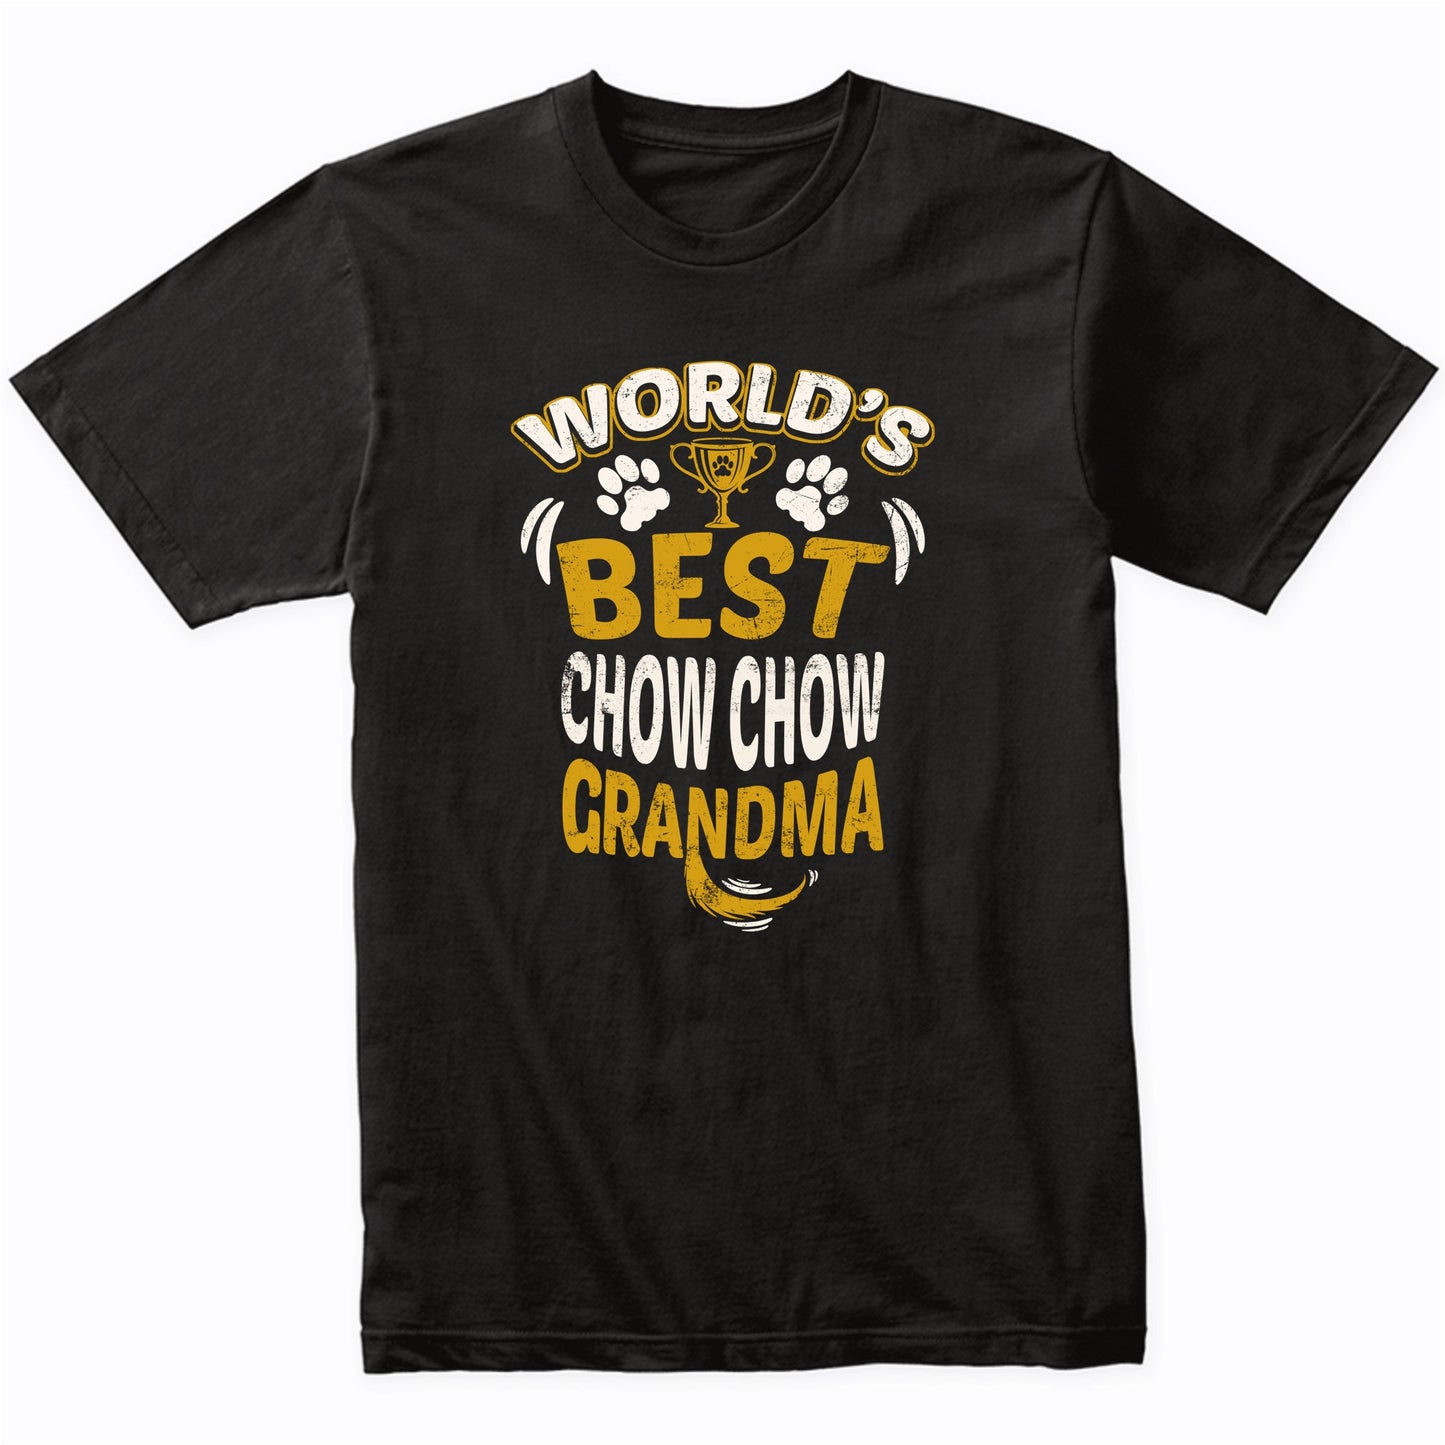 World's Best Chow Chow Grandma Graphic T-Shirt